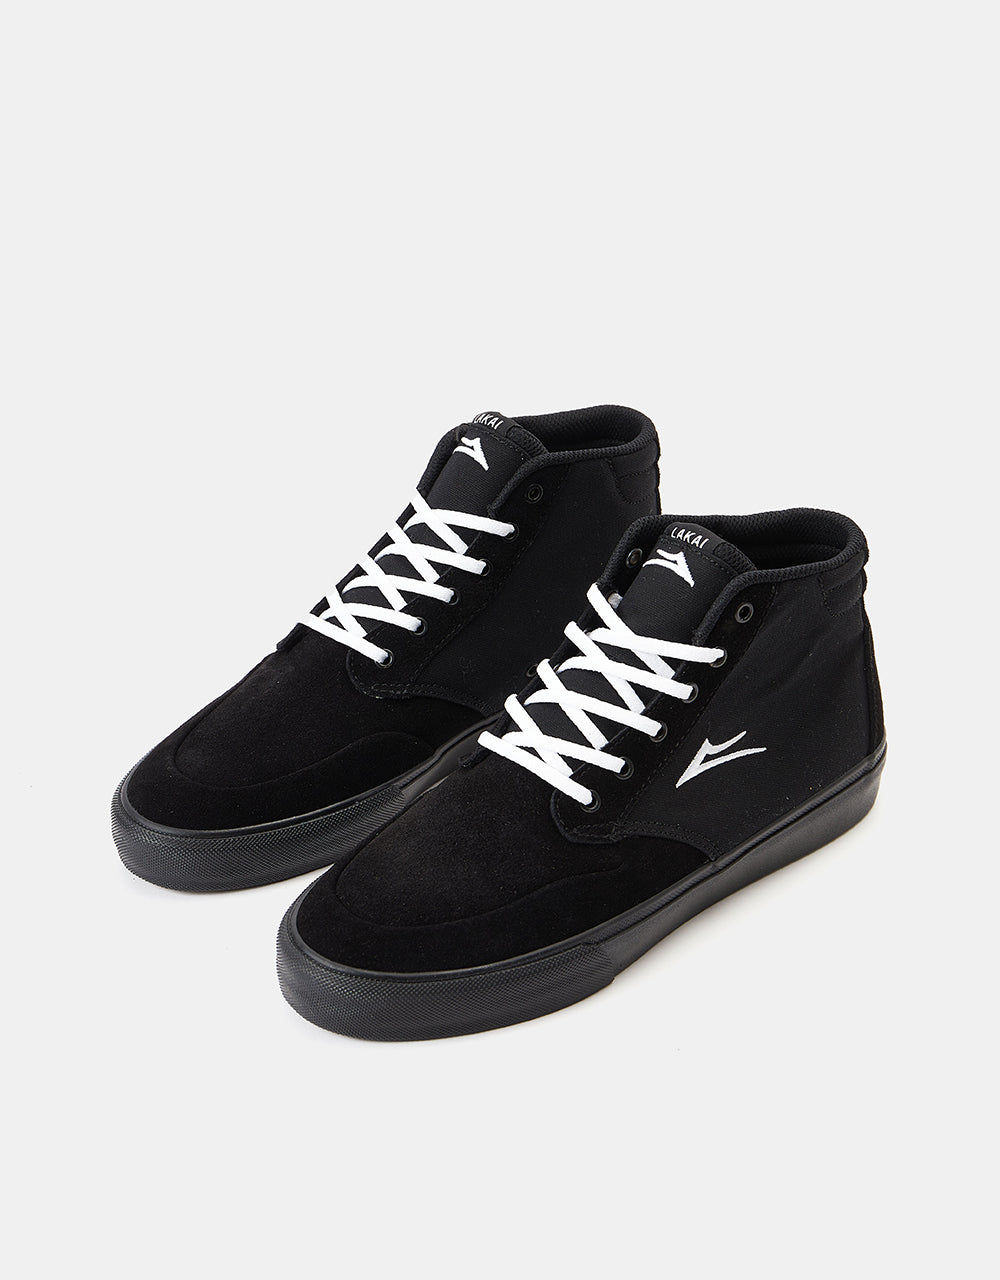 Lakai Riley 3 High Skate Shoes - Black/Black Suede